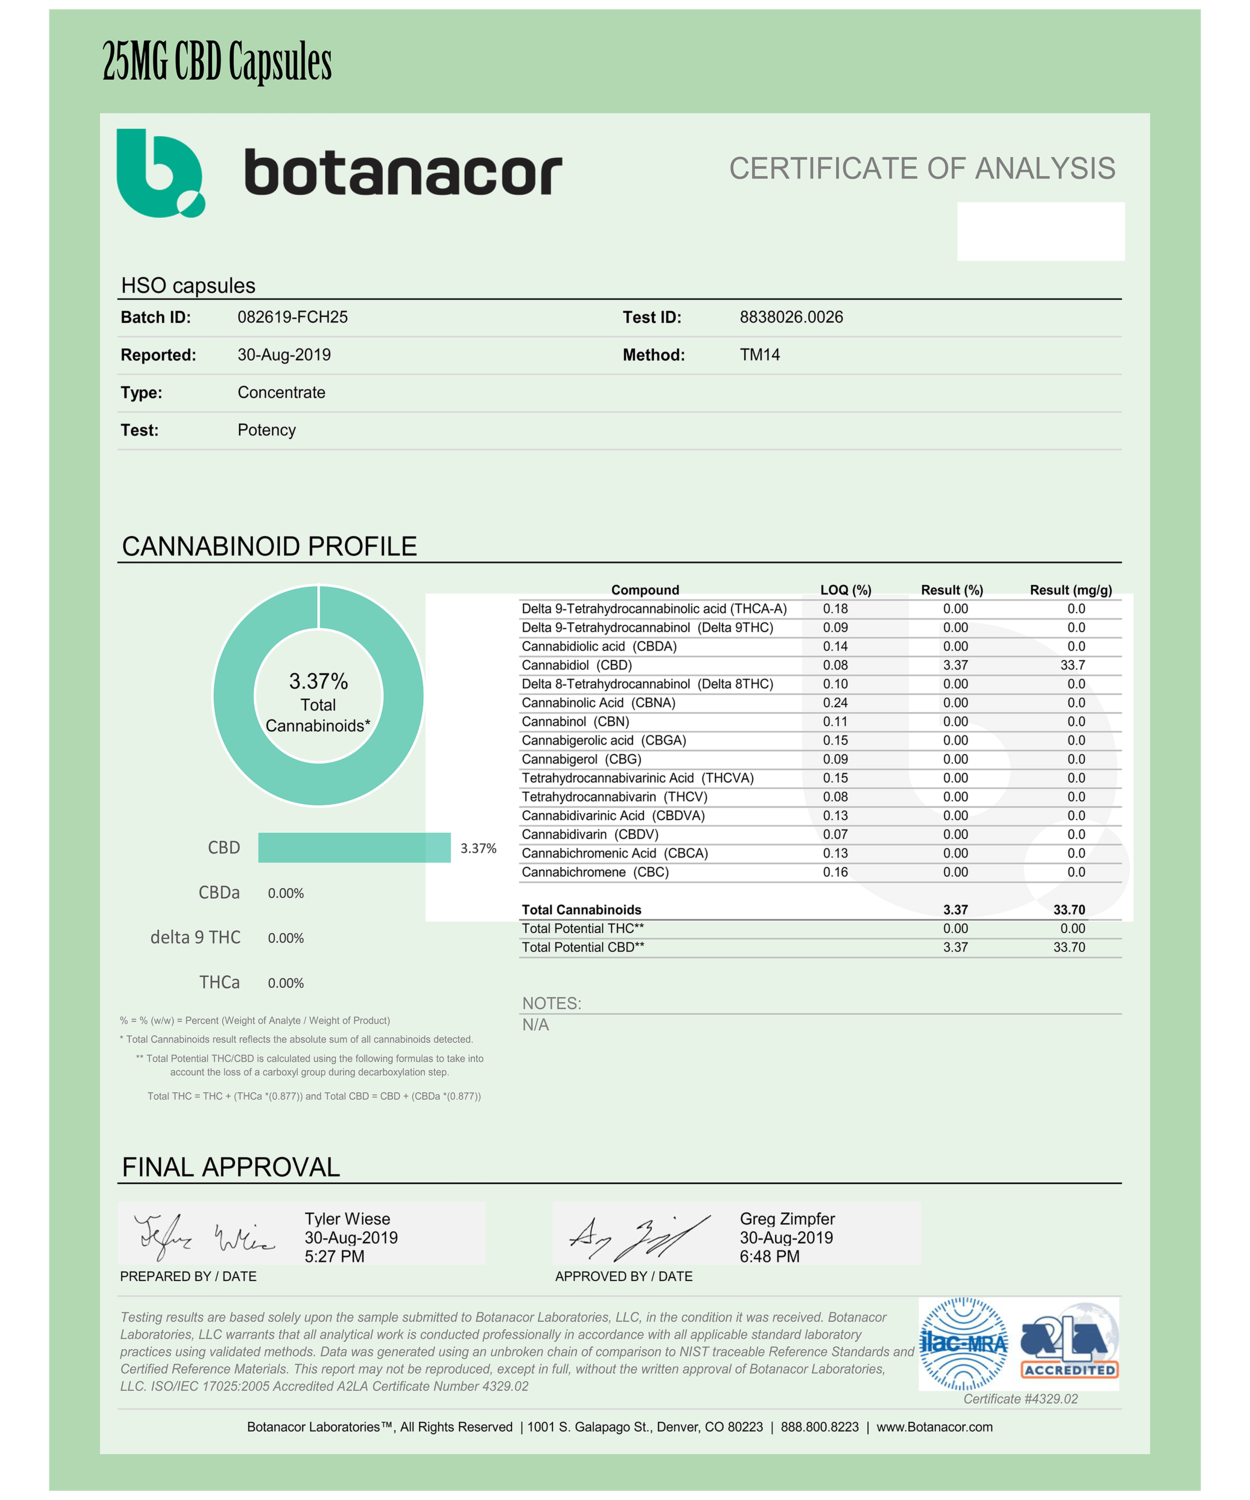 Texas Tonix - 25mg CBD Capsules Certificate of Analysis